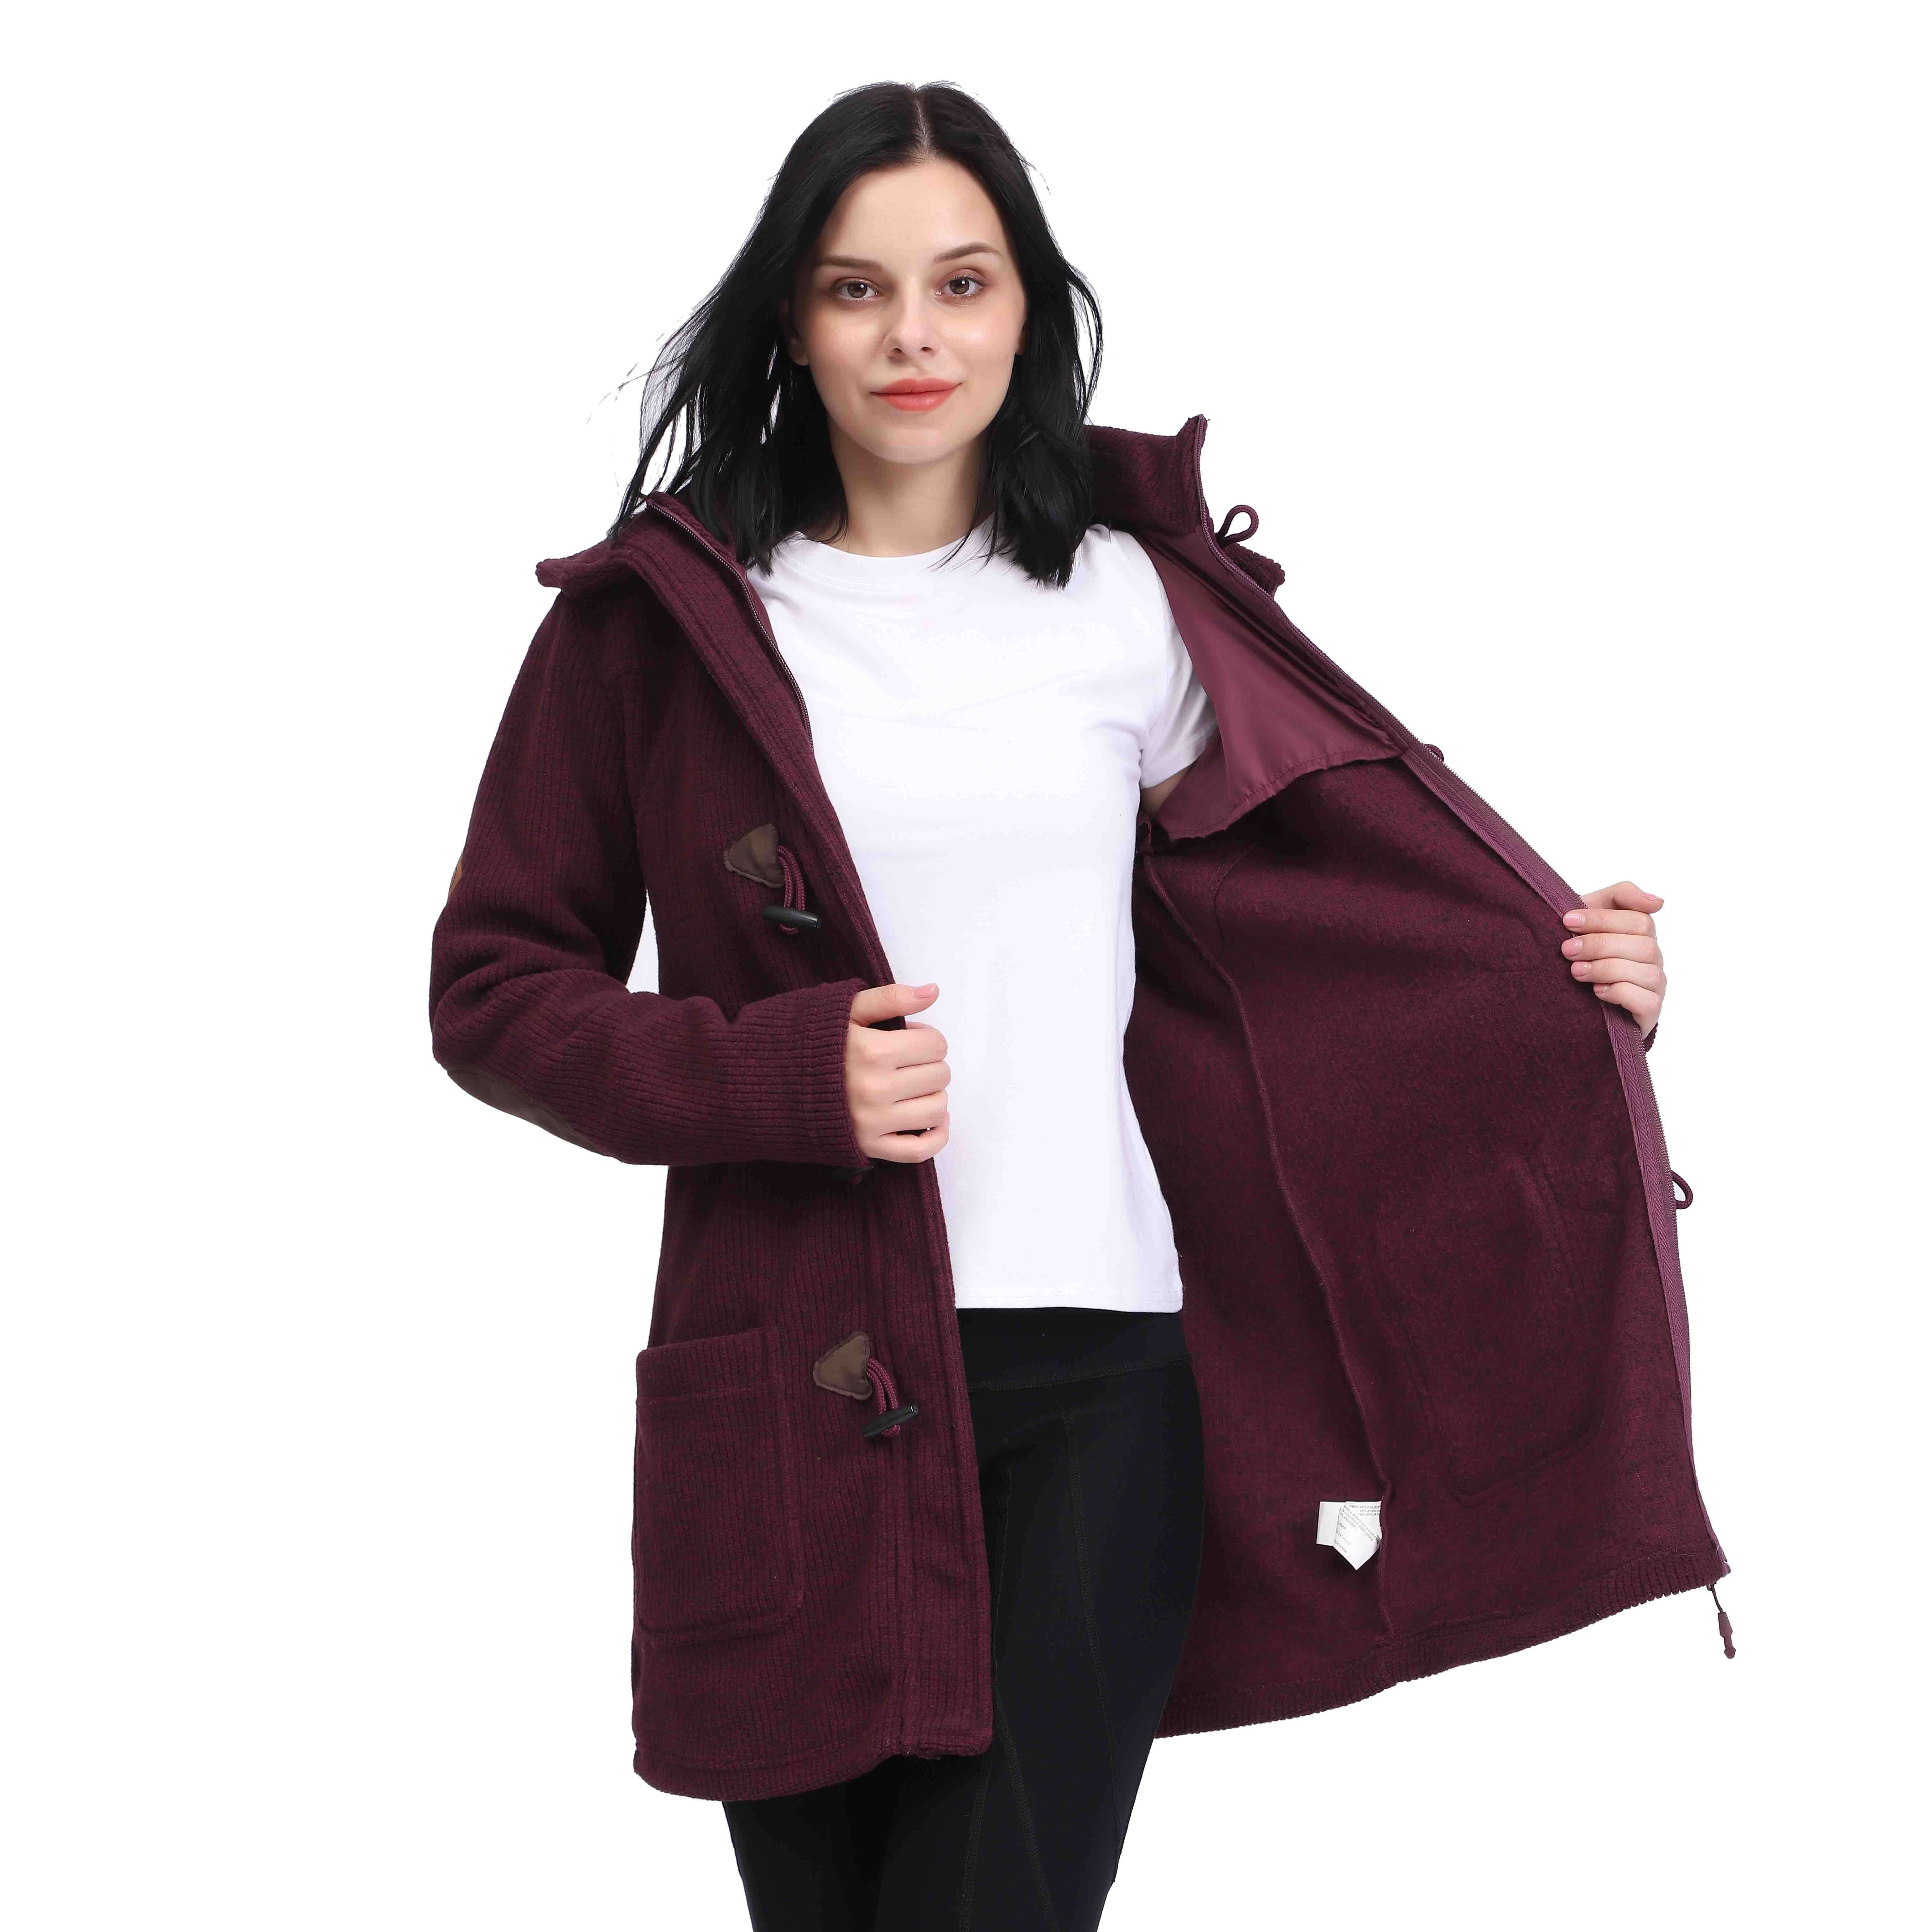 Women's Winter Cord Fleece Warm Cute Horn Button Coat Jacket